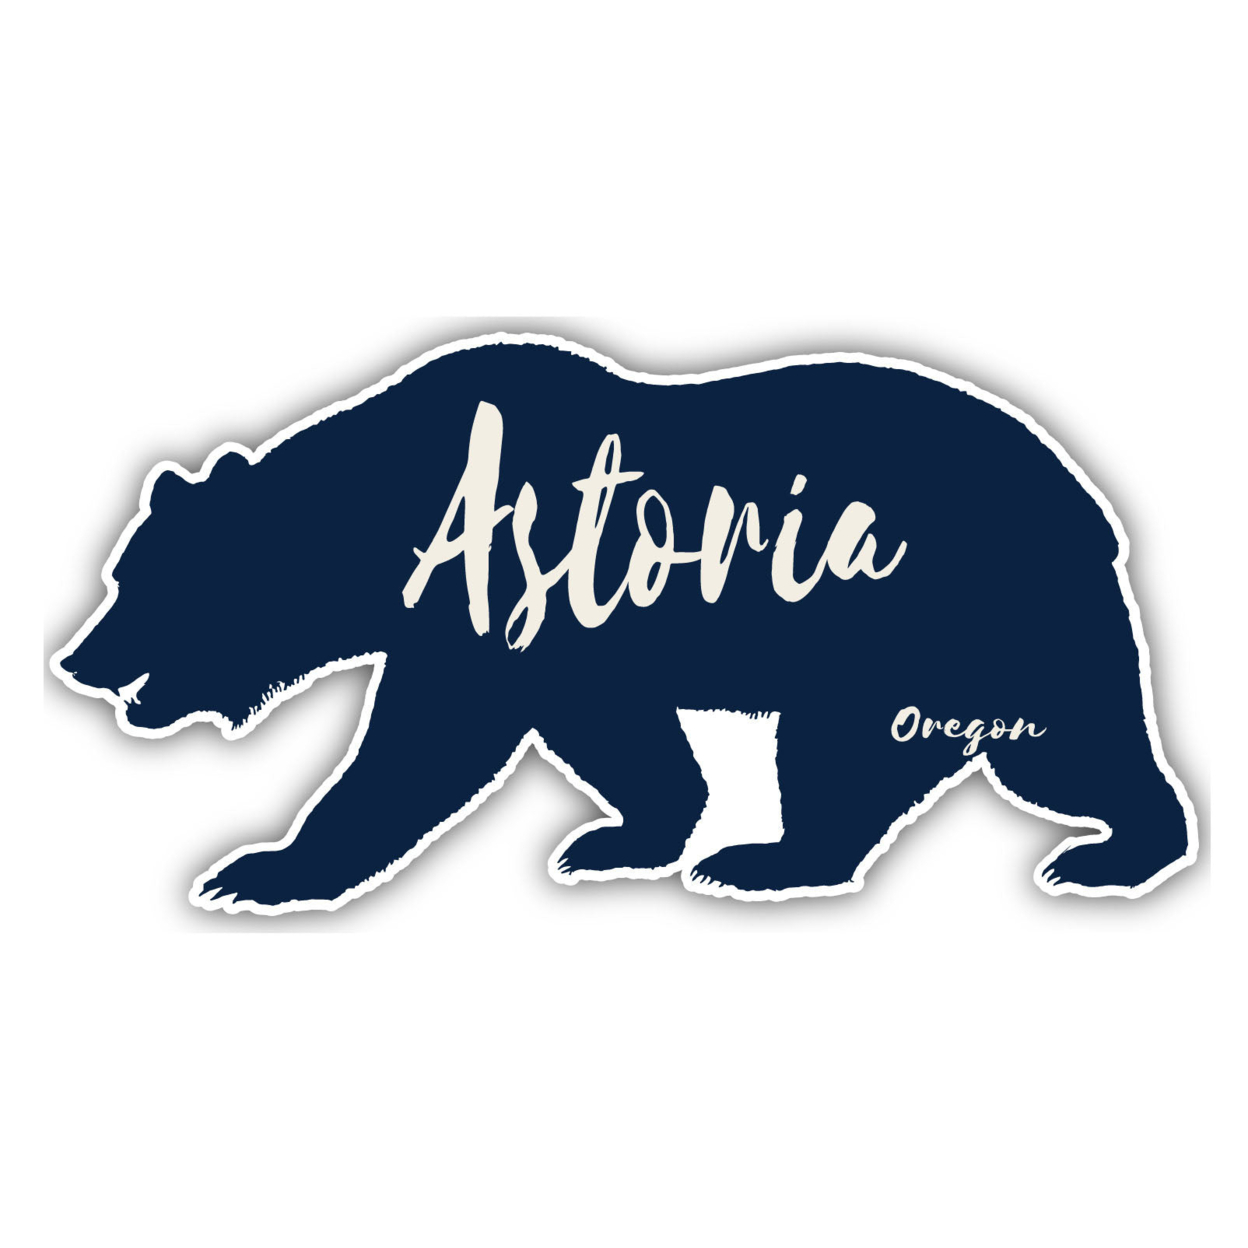 Astoria Oregon Souvenir Decorative Stickers (Choose Theme And Size) - Single Unit, 12-Inch, Bear